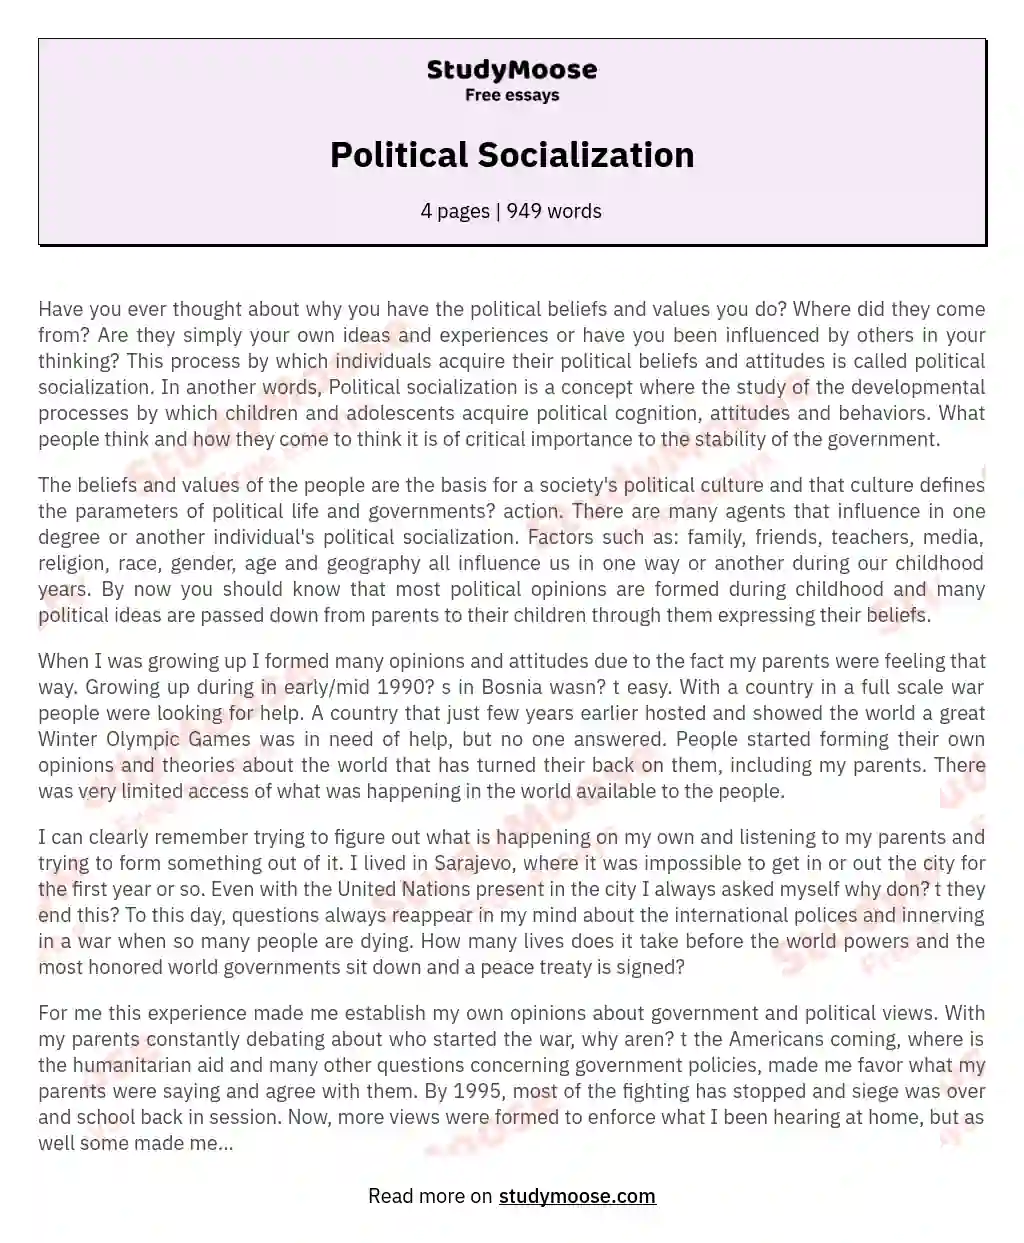 Political Socialization essay